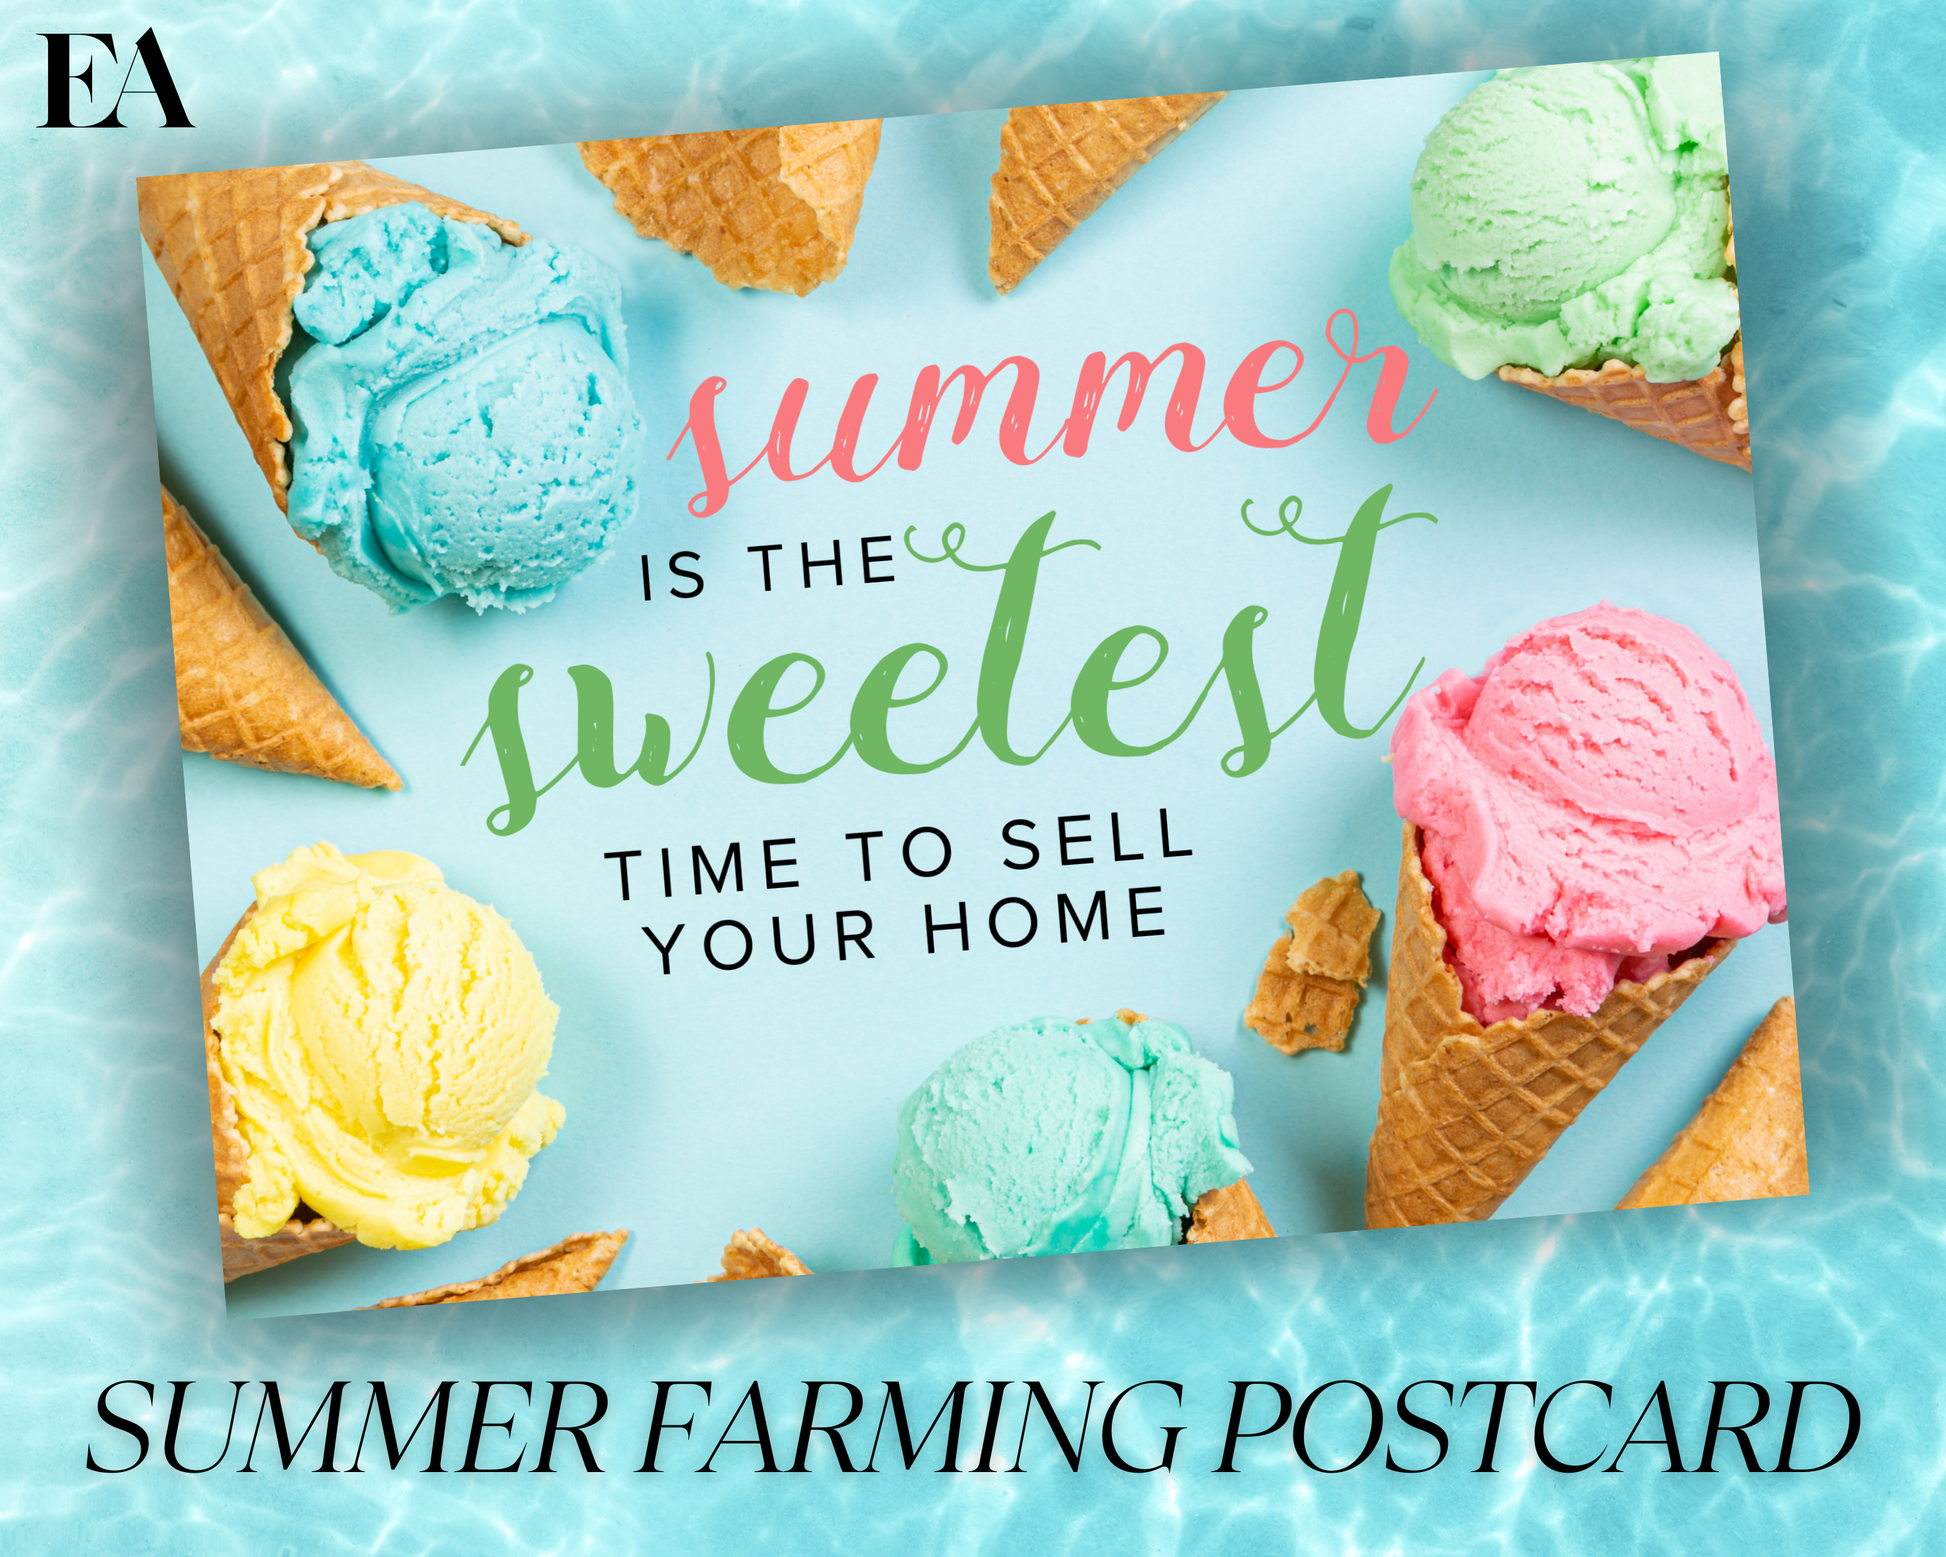 Real Estate Summer Postcard Template Summer Farming Postcard Home Seller Postcard Real Estate Farming Farming Marketing Canva Postcard Mail